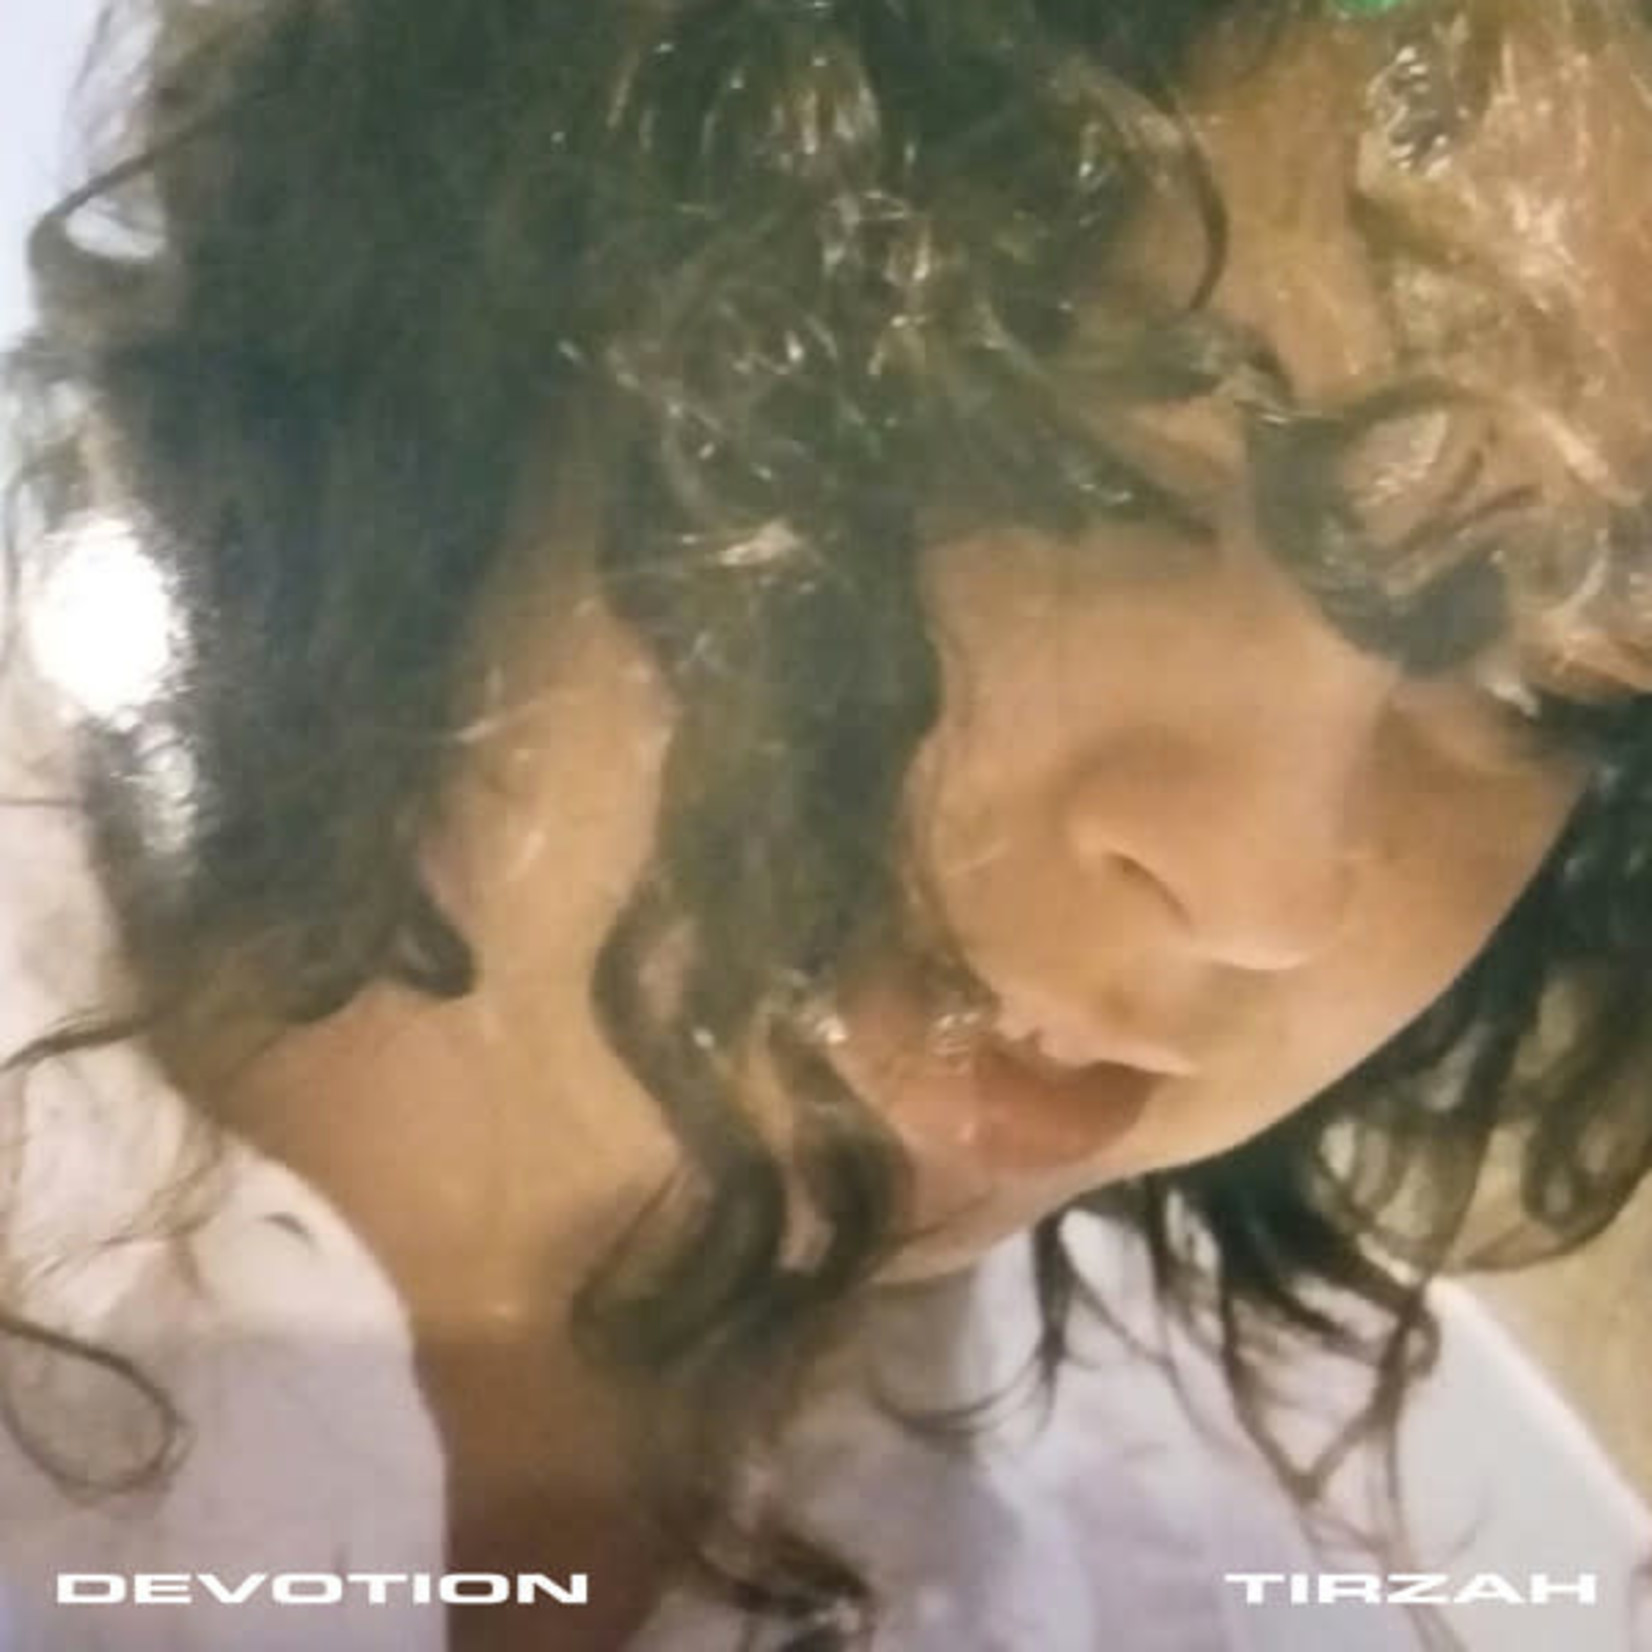 [New] Tirzah - Devotion